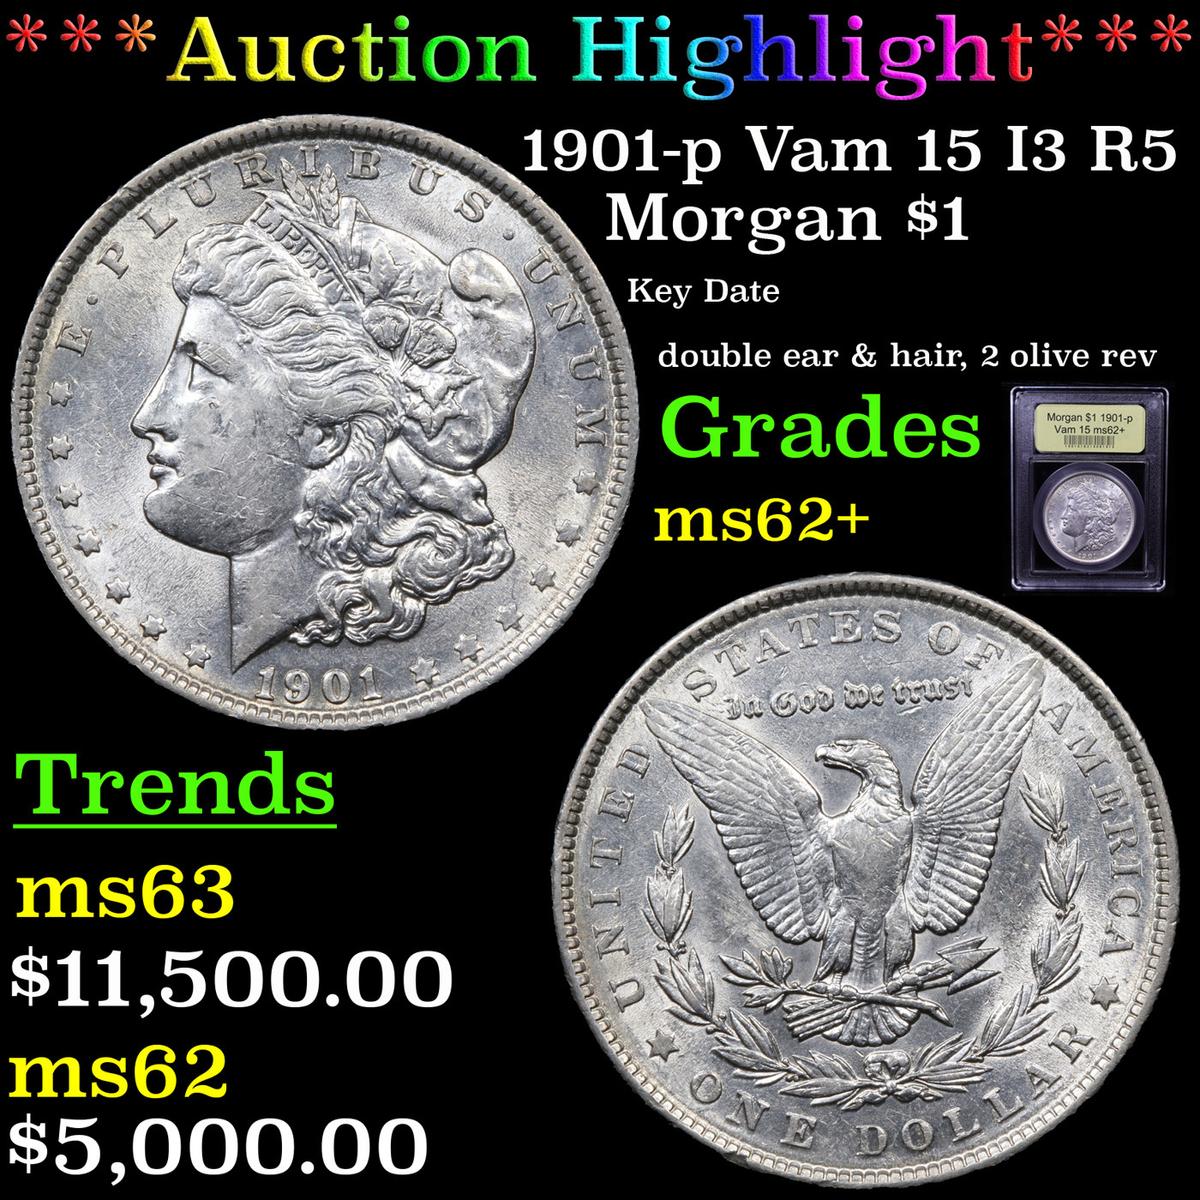 ***Auction Highlight*** 1901-p Vam 15 I3 R5 Morgan Dollar $1 Graded Select Unc By USCG (fc)